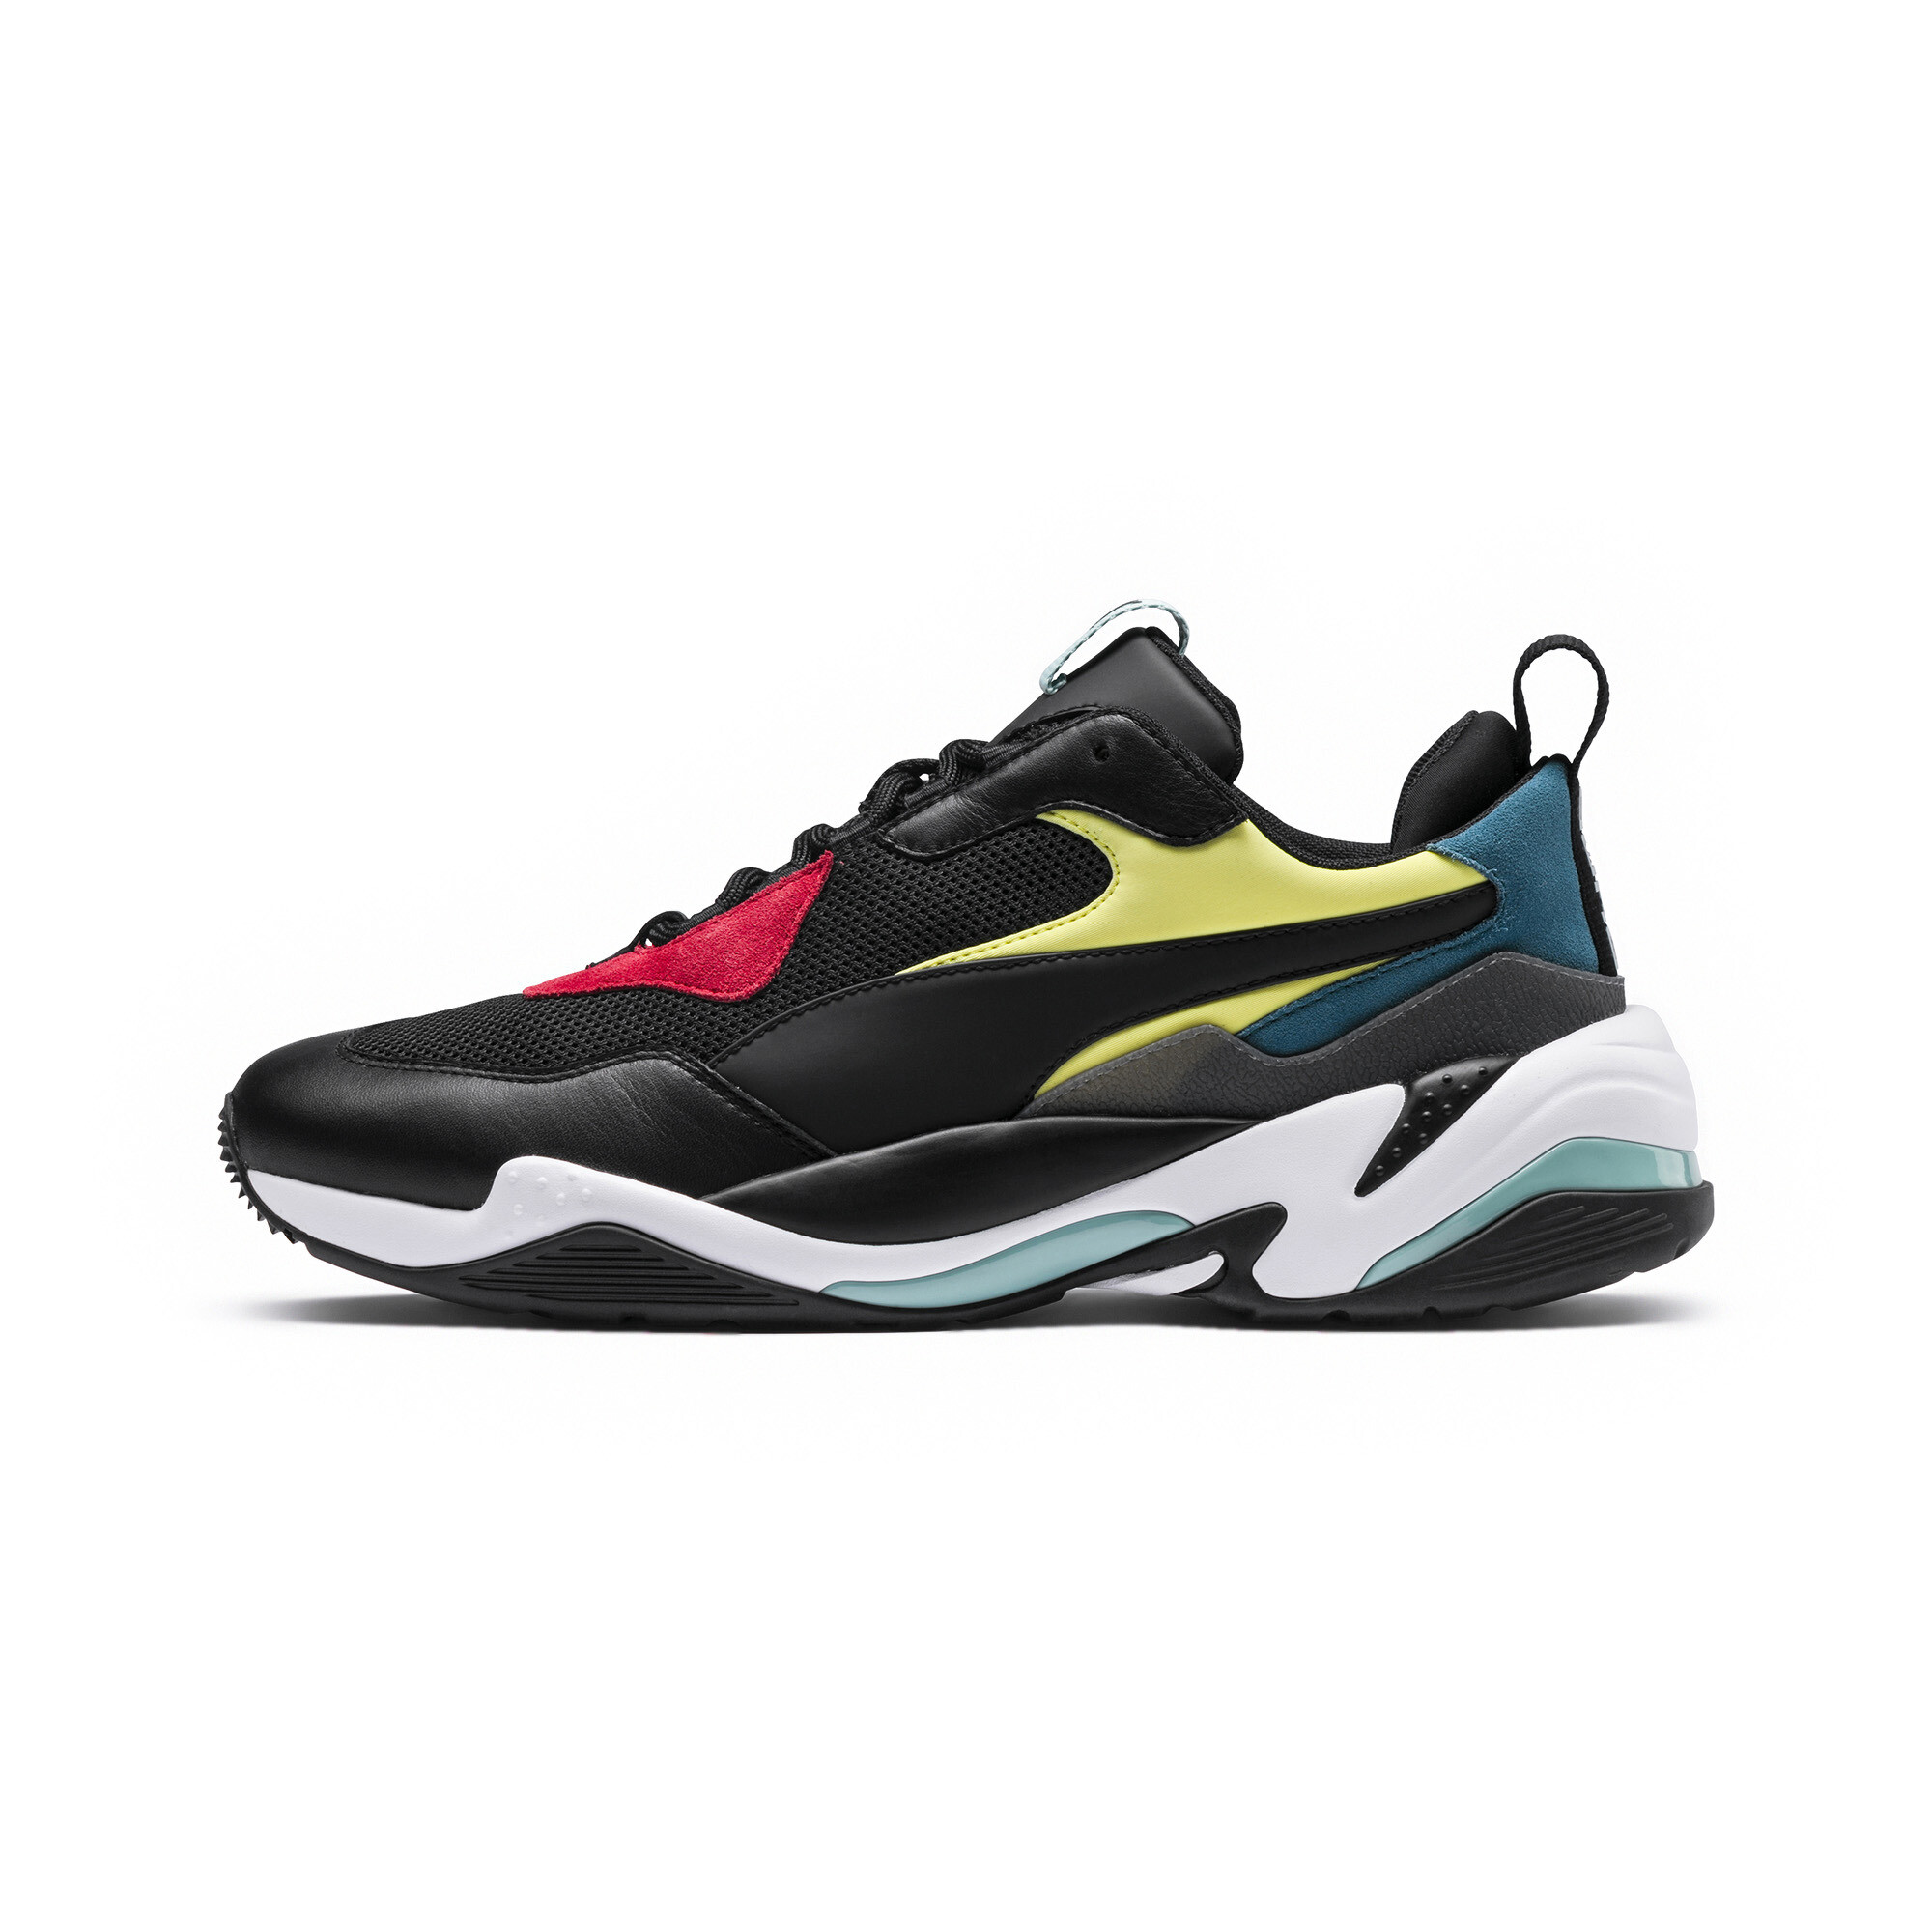 Puma Thunder Spectra Sneakers Men Shoe Prime Select Ebay